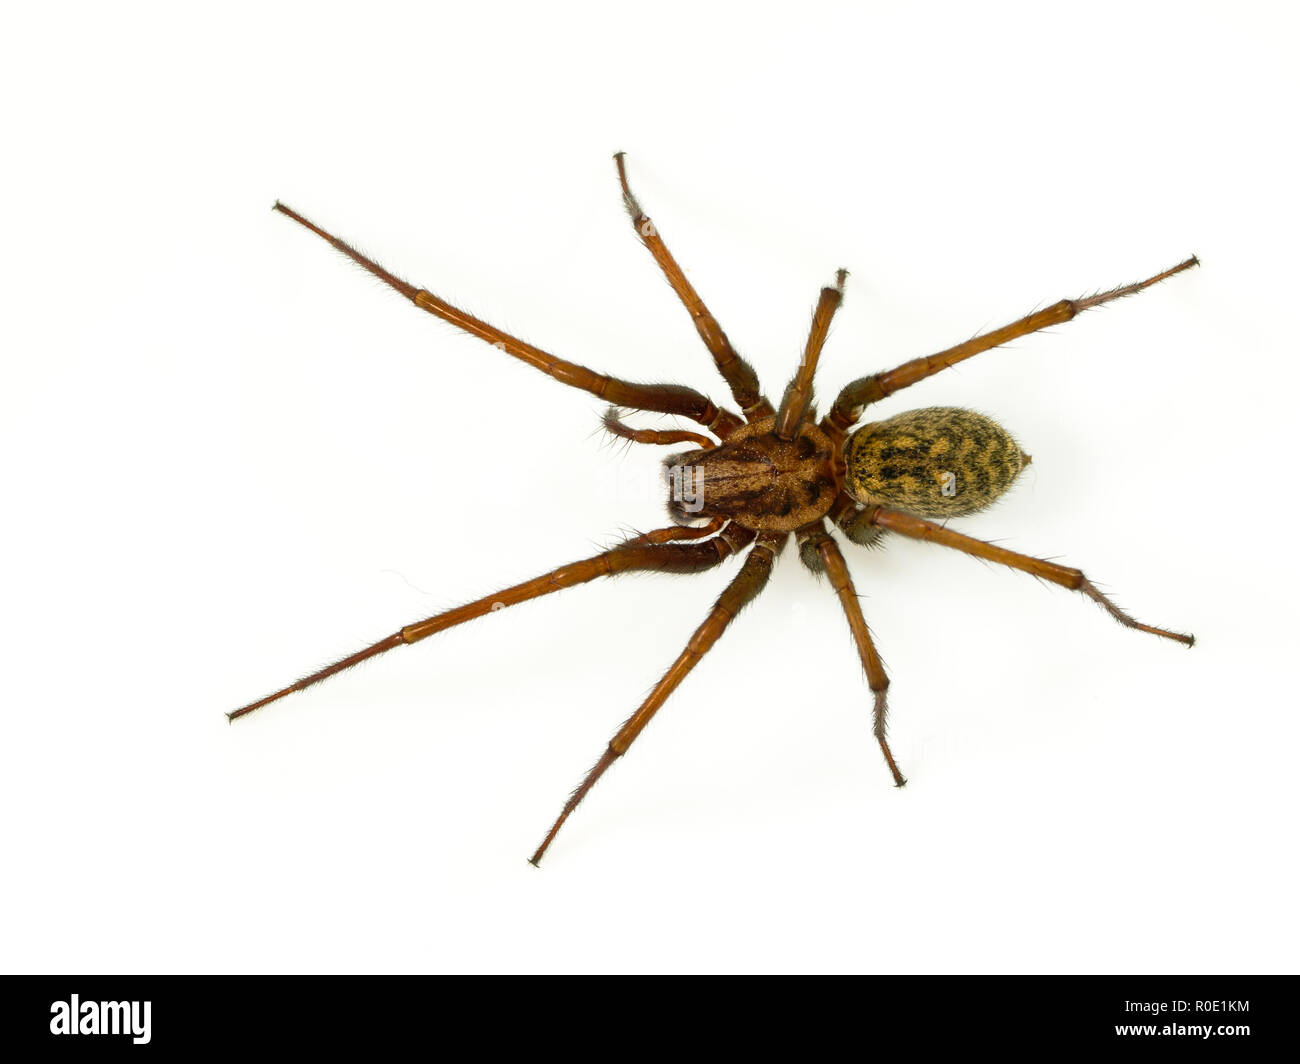 Giant house spider (Tegenaria domesticus) on a white background Stock Photo